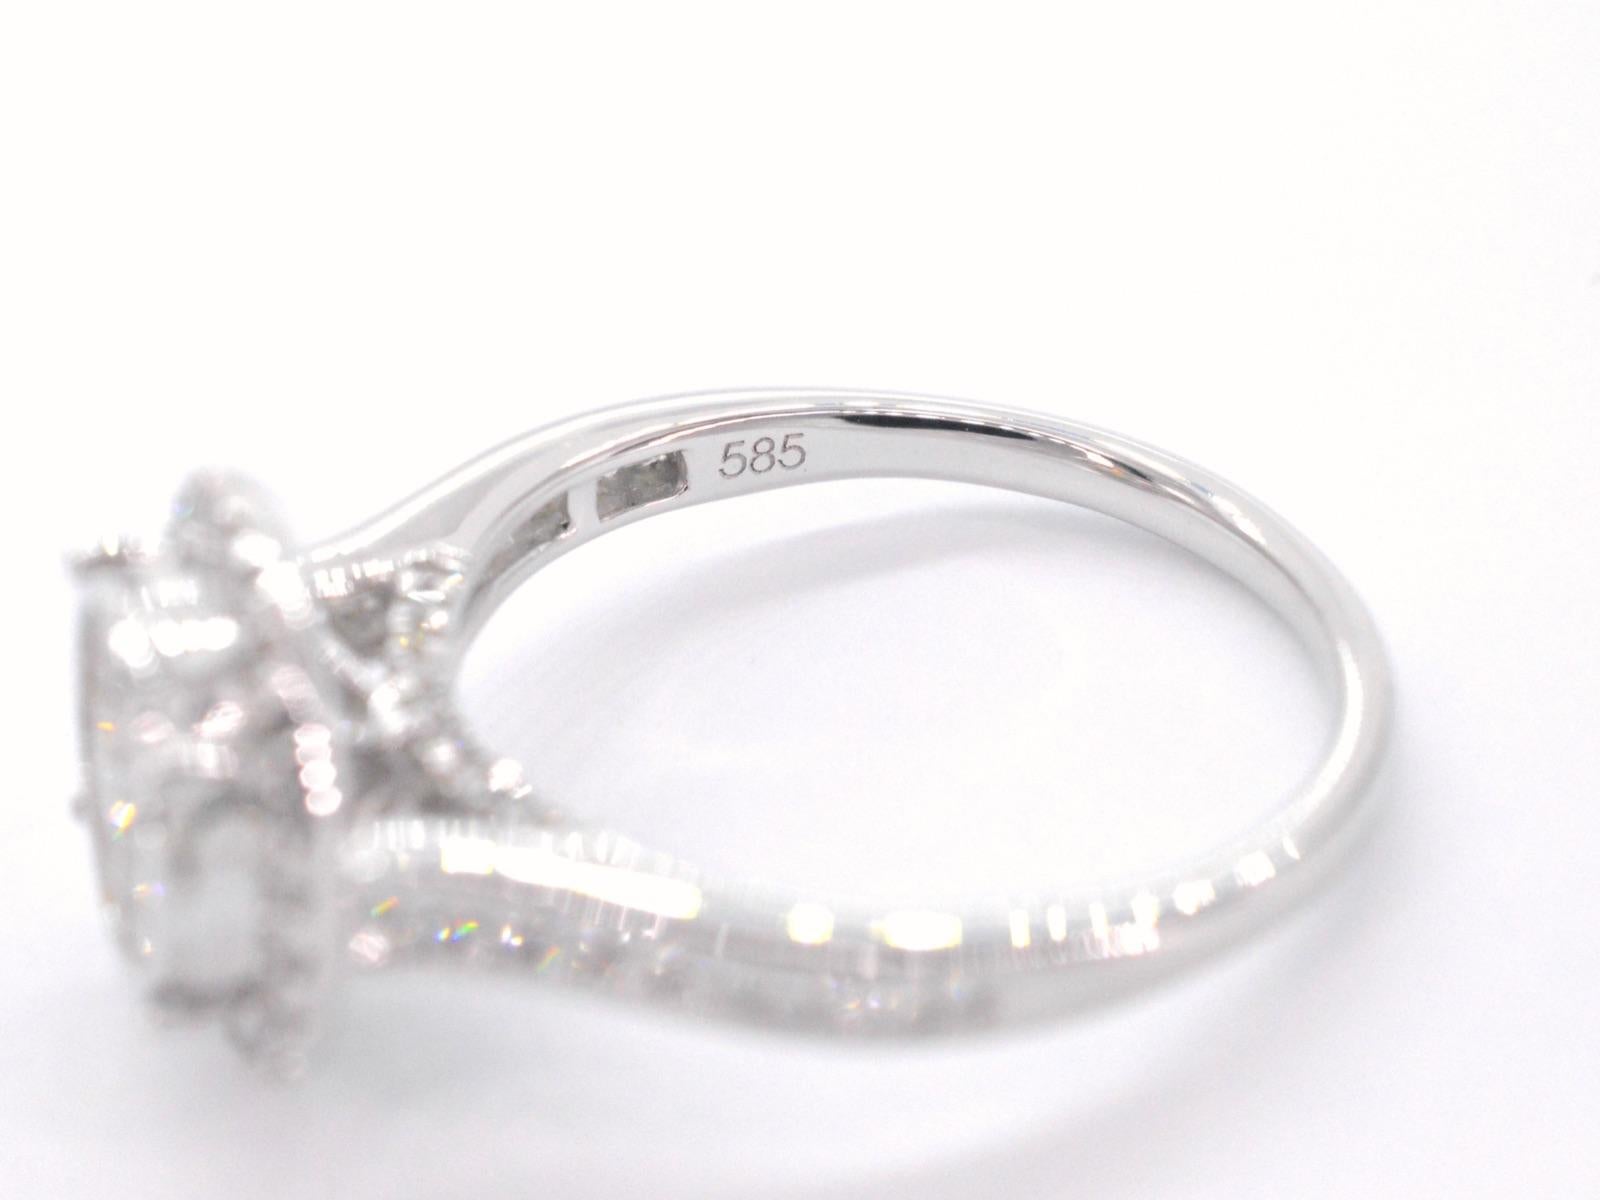 Women's White Gold Entourage Ring with Diamonds For Sale